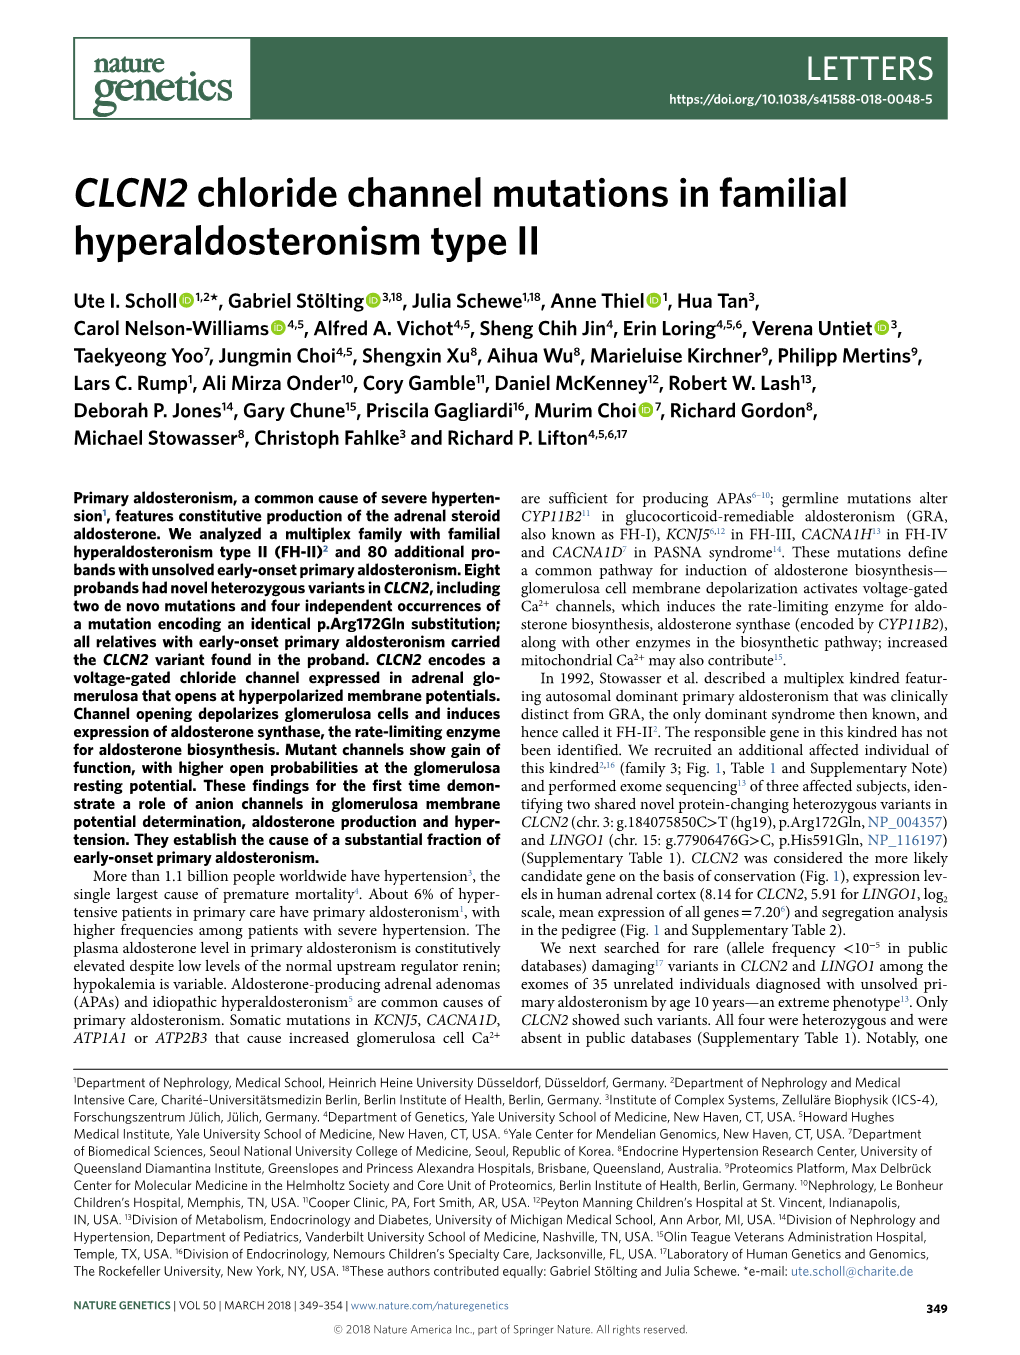 CLCN2 Chloride Channel Mutations in Familial Hyperaldosteronism Type II